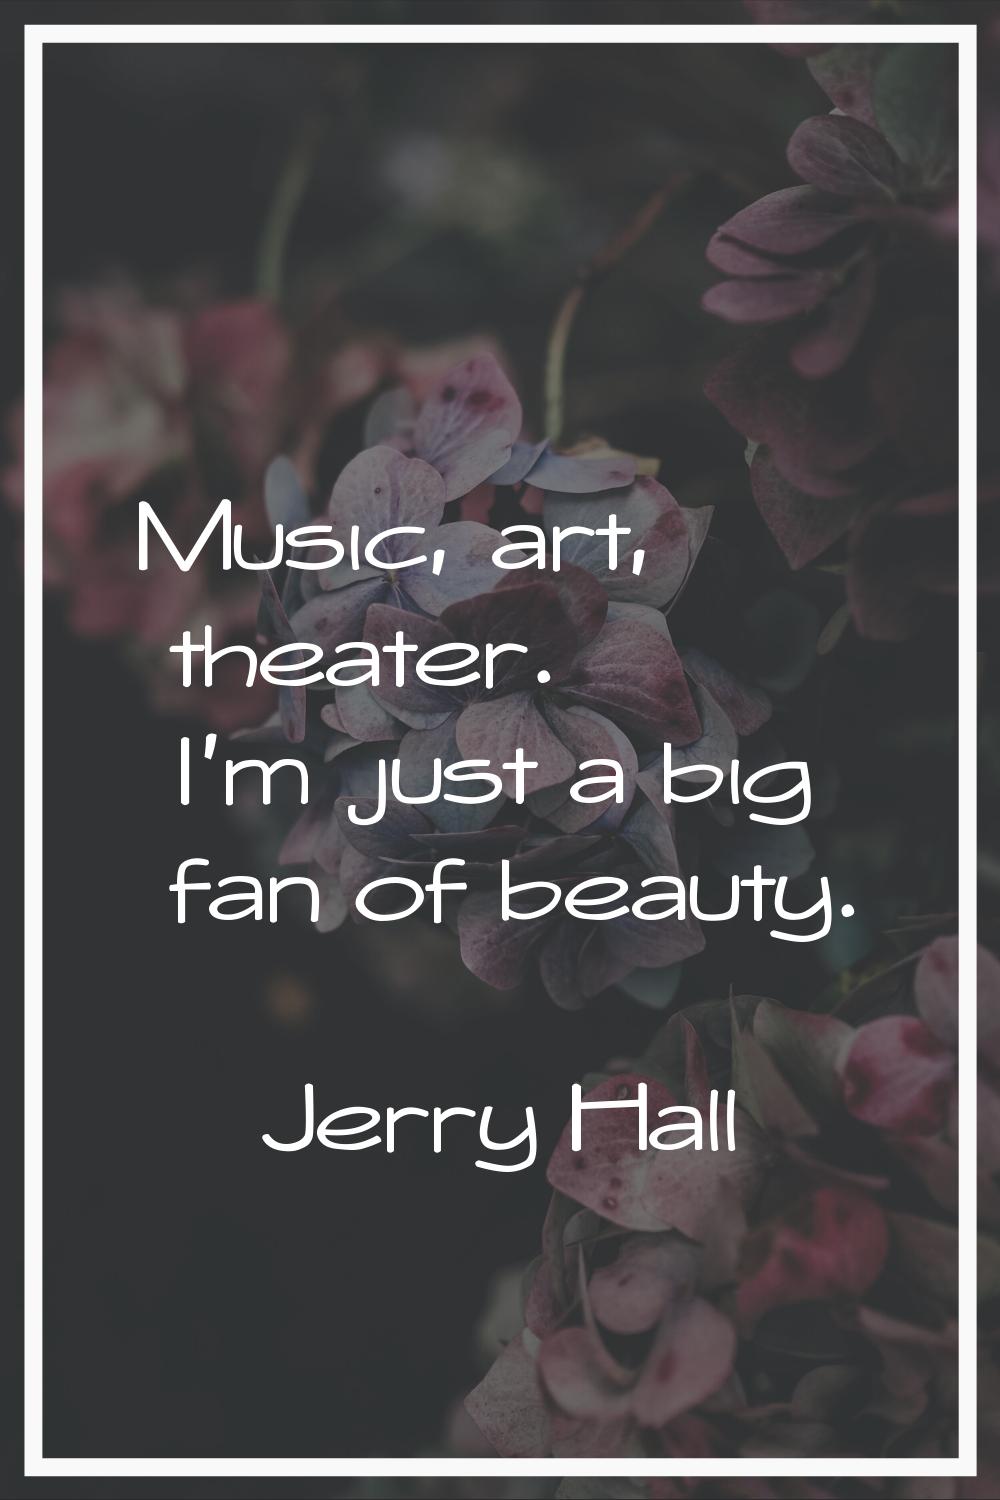 Music, art, theater. I'm just a big fan of beauty.